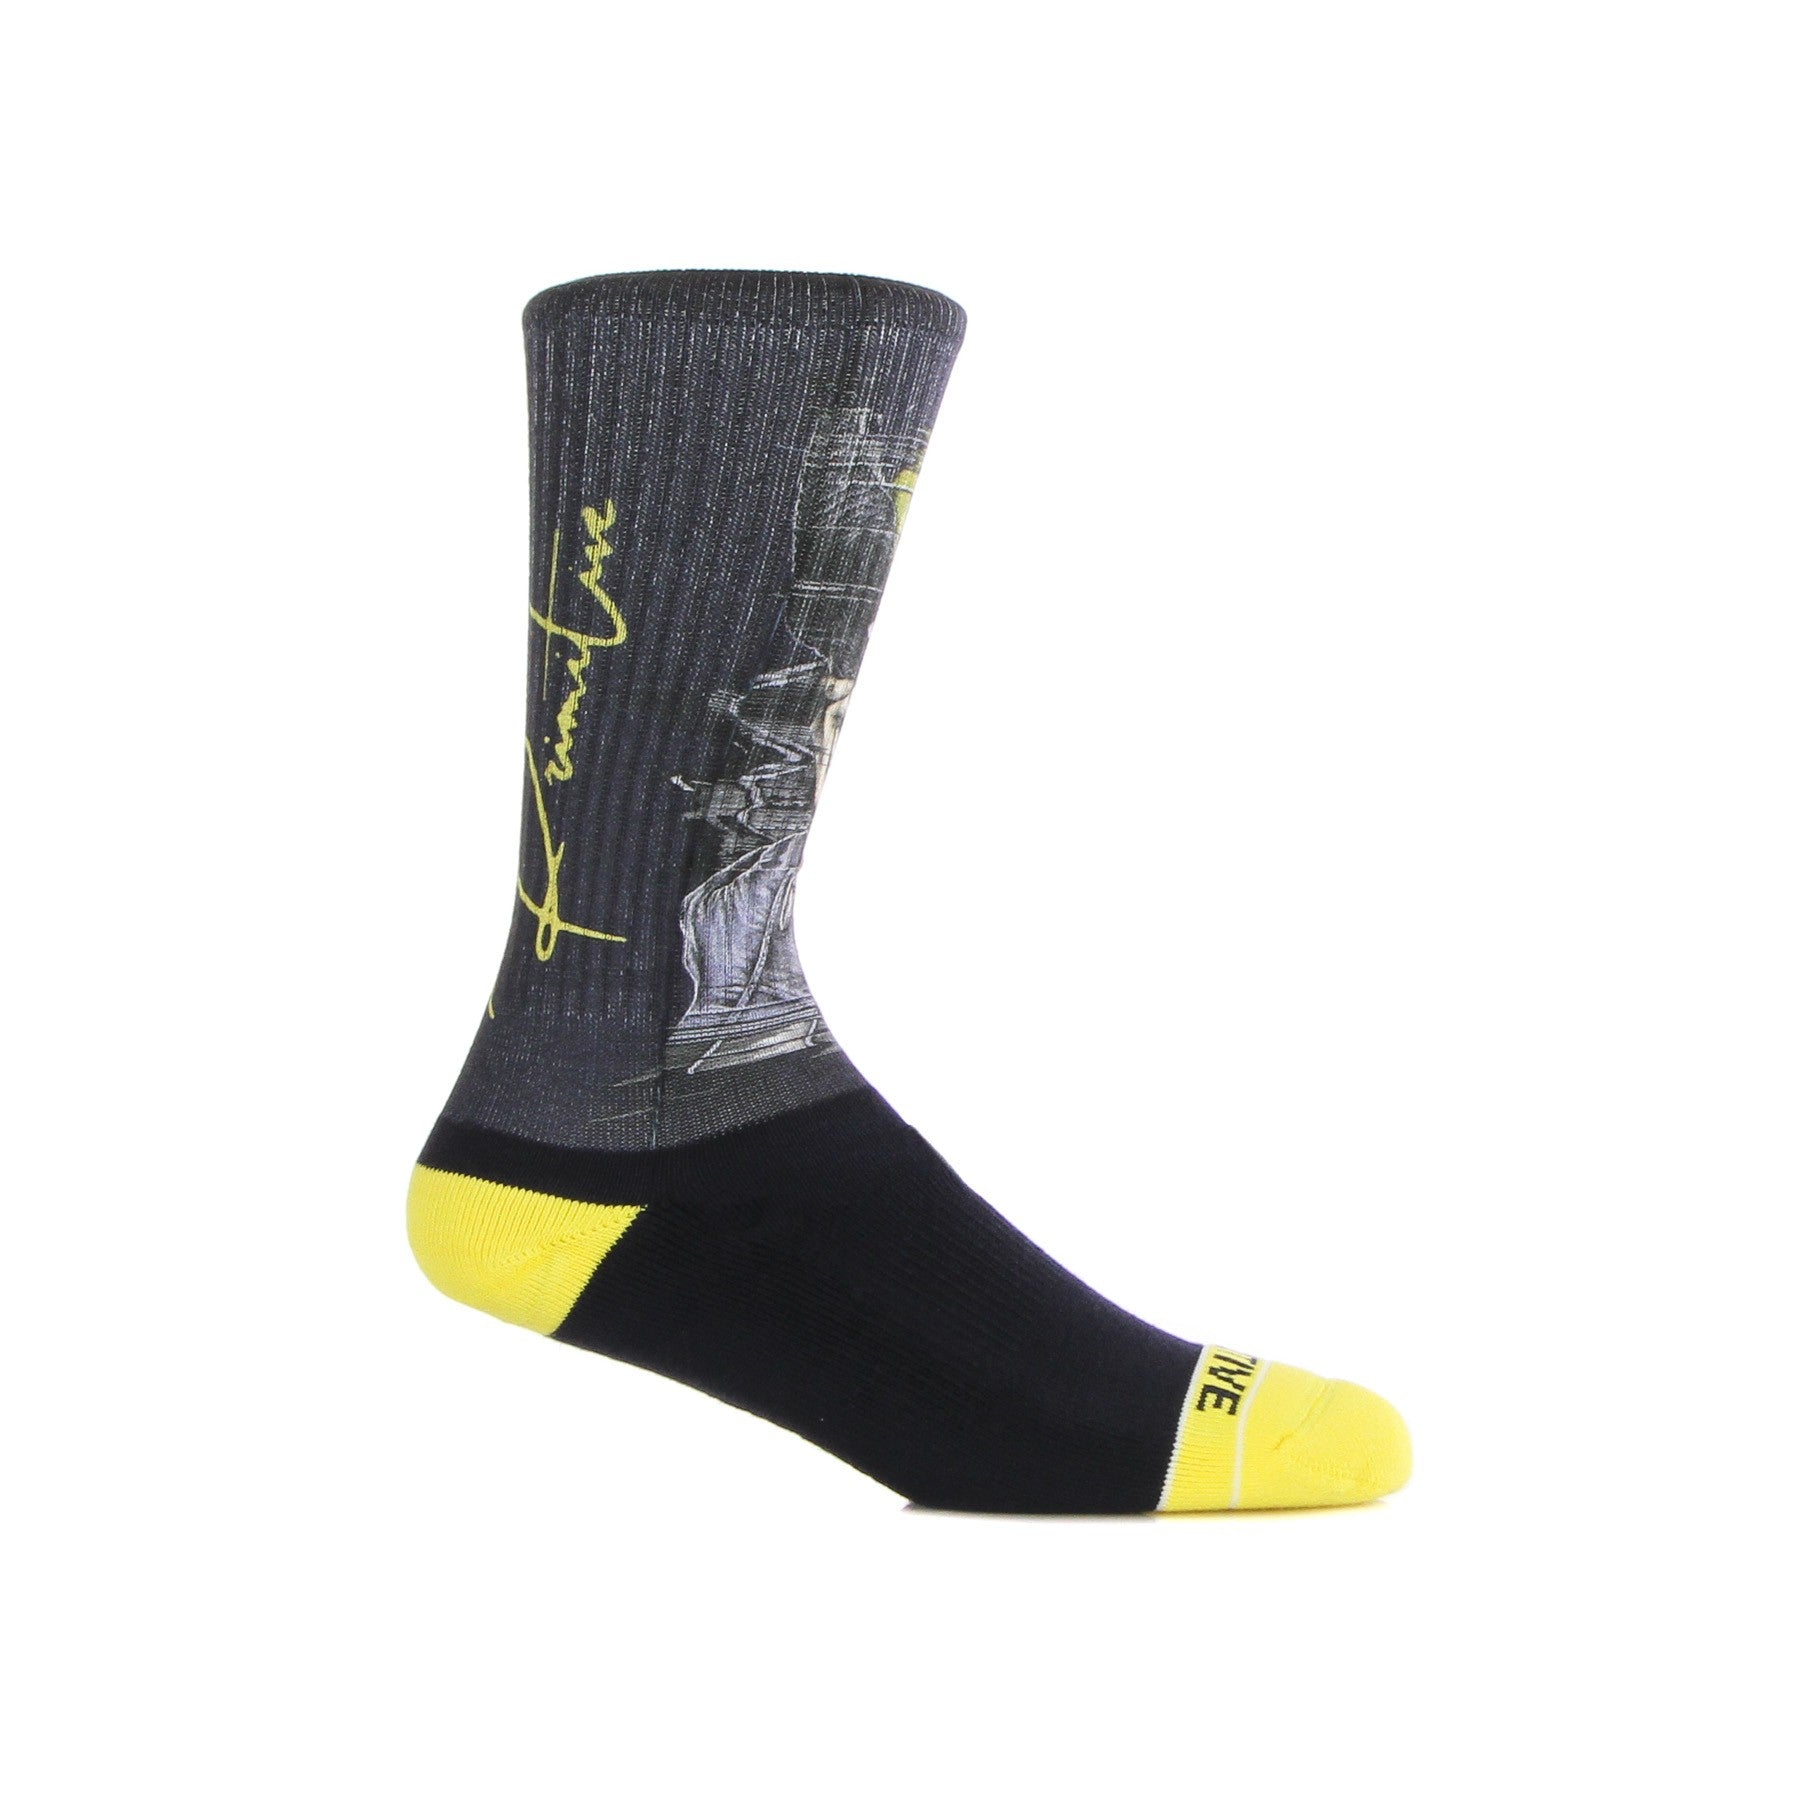 Primitive, Calza Media Uomo Wolverine Sock, Black/yellow